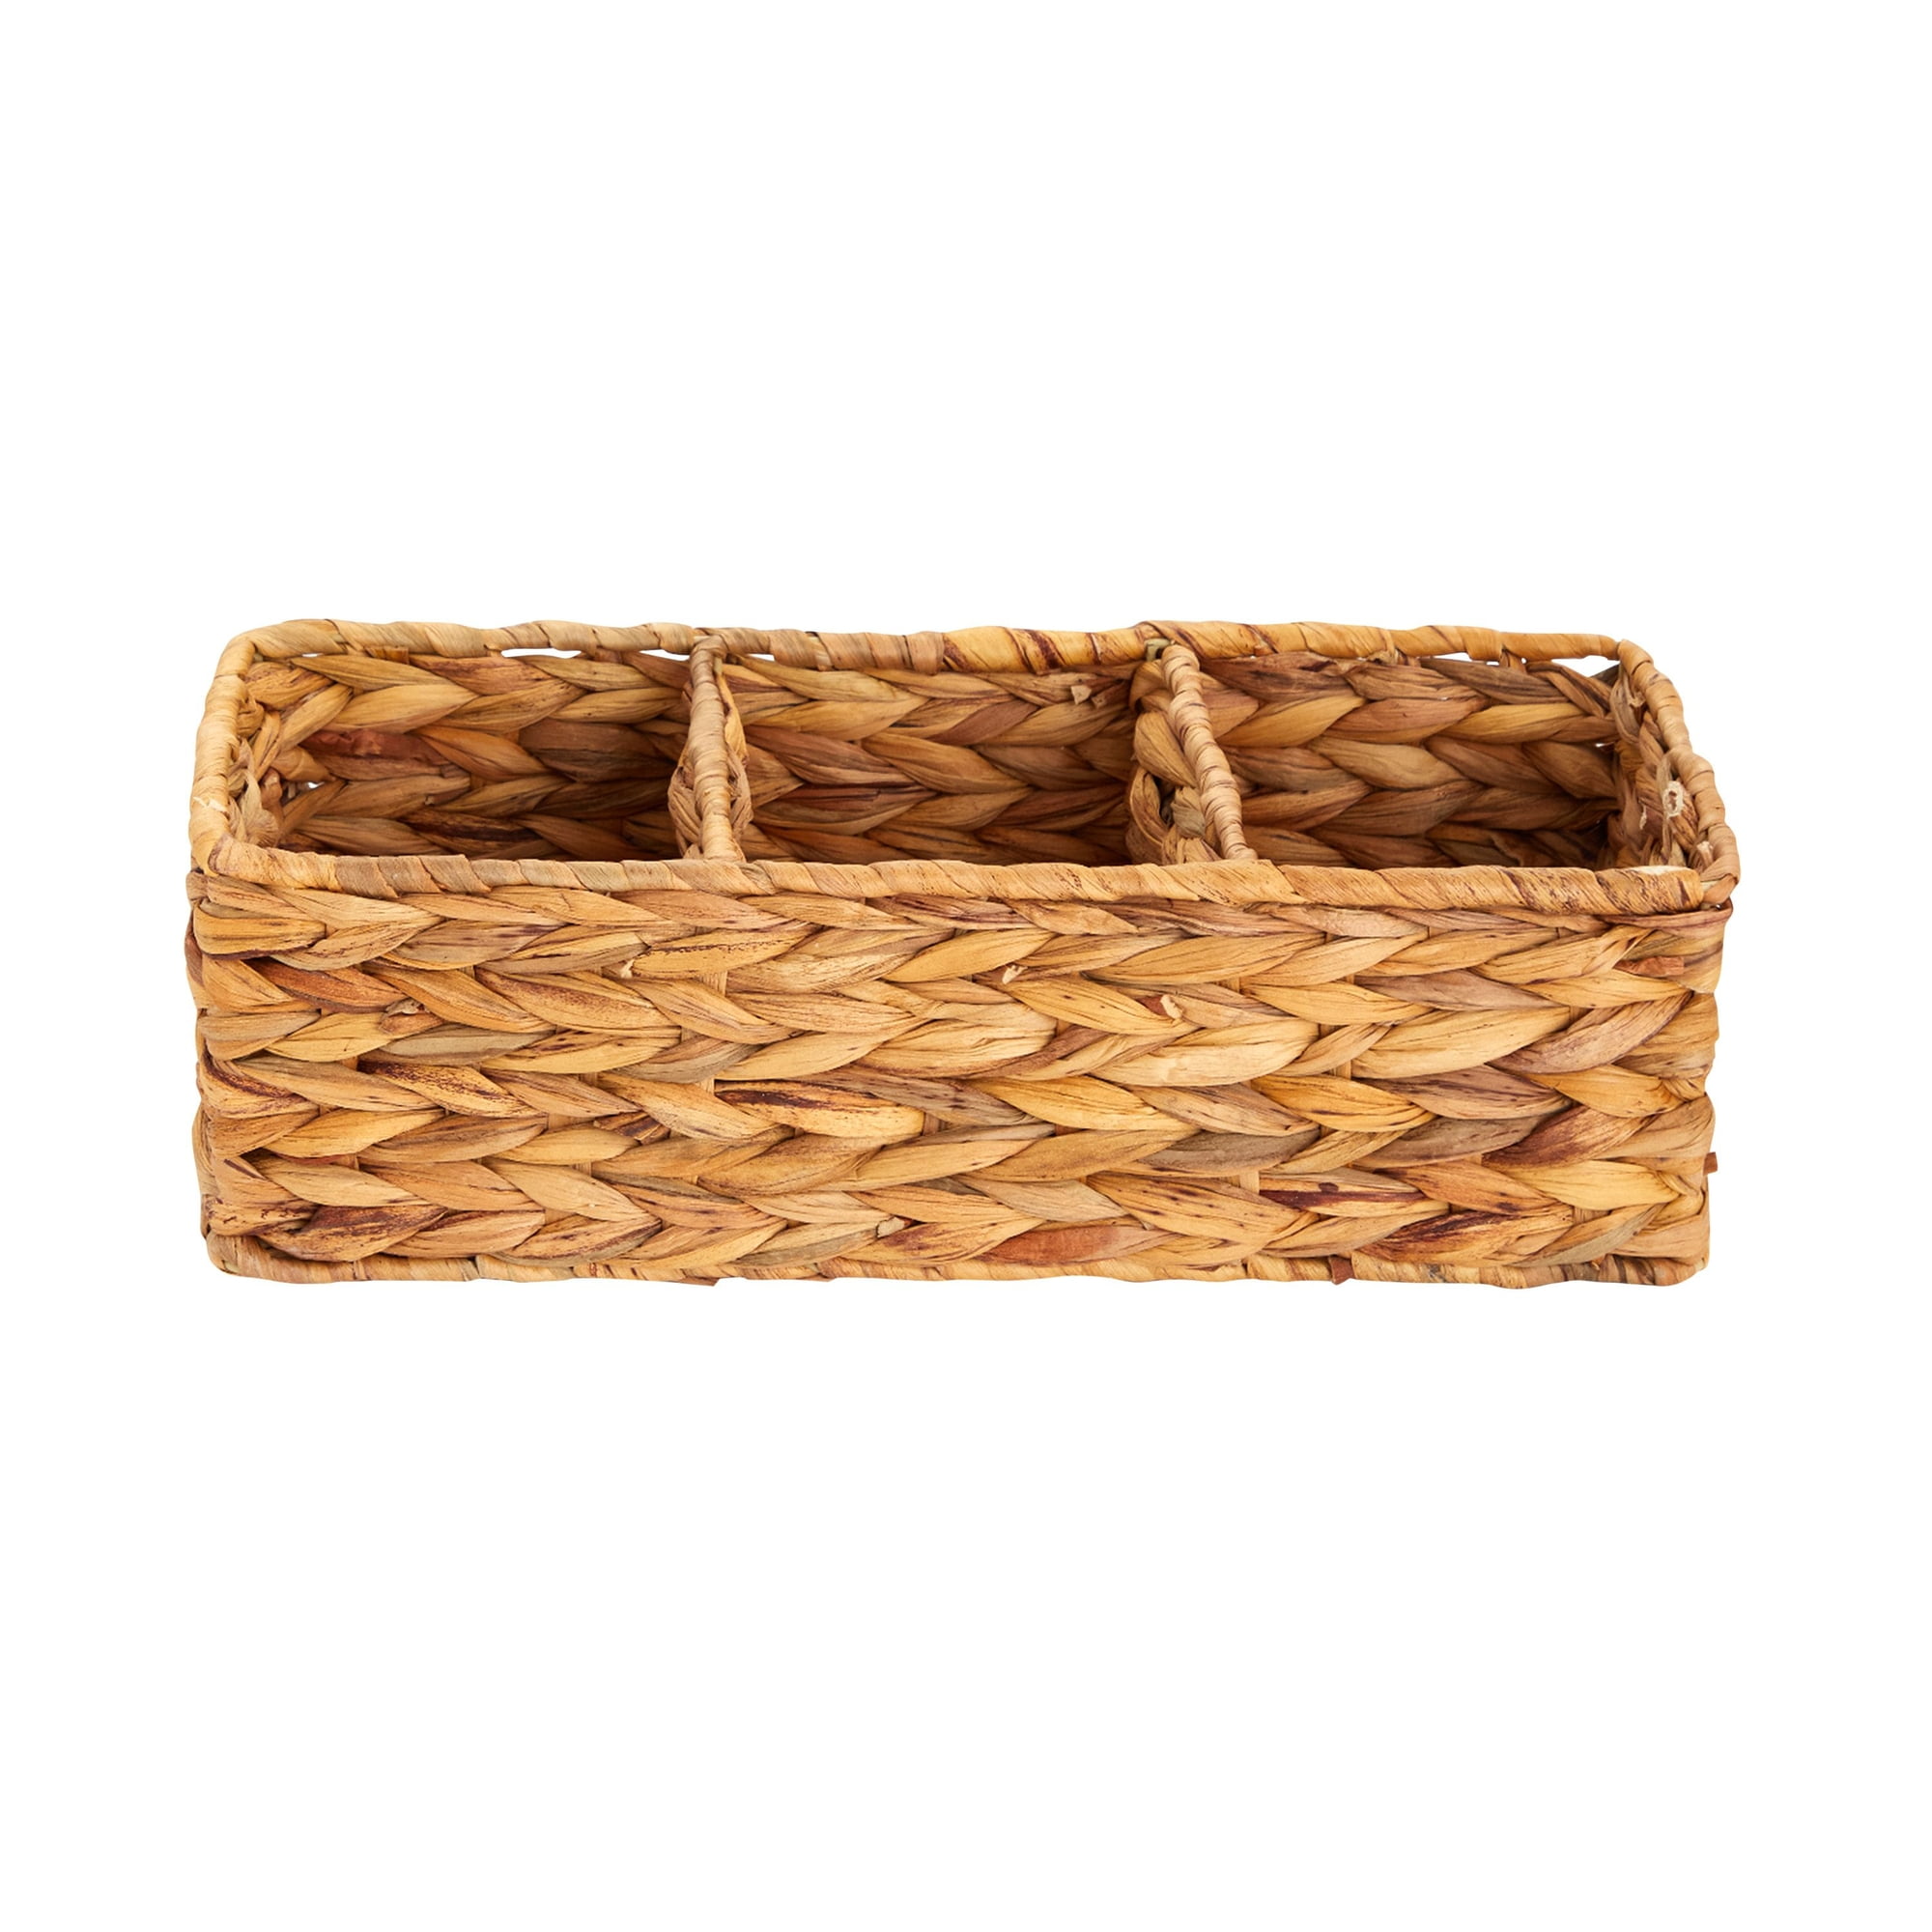 Farmlyn Creek 2 Pack Decorative Water Hyacinth Storage Baskets with 3  Compartments for Bathroom, Laundry Room, Nursery